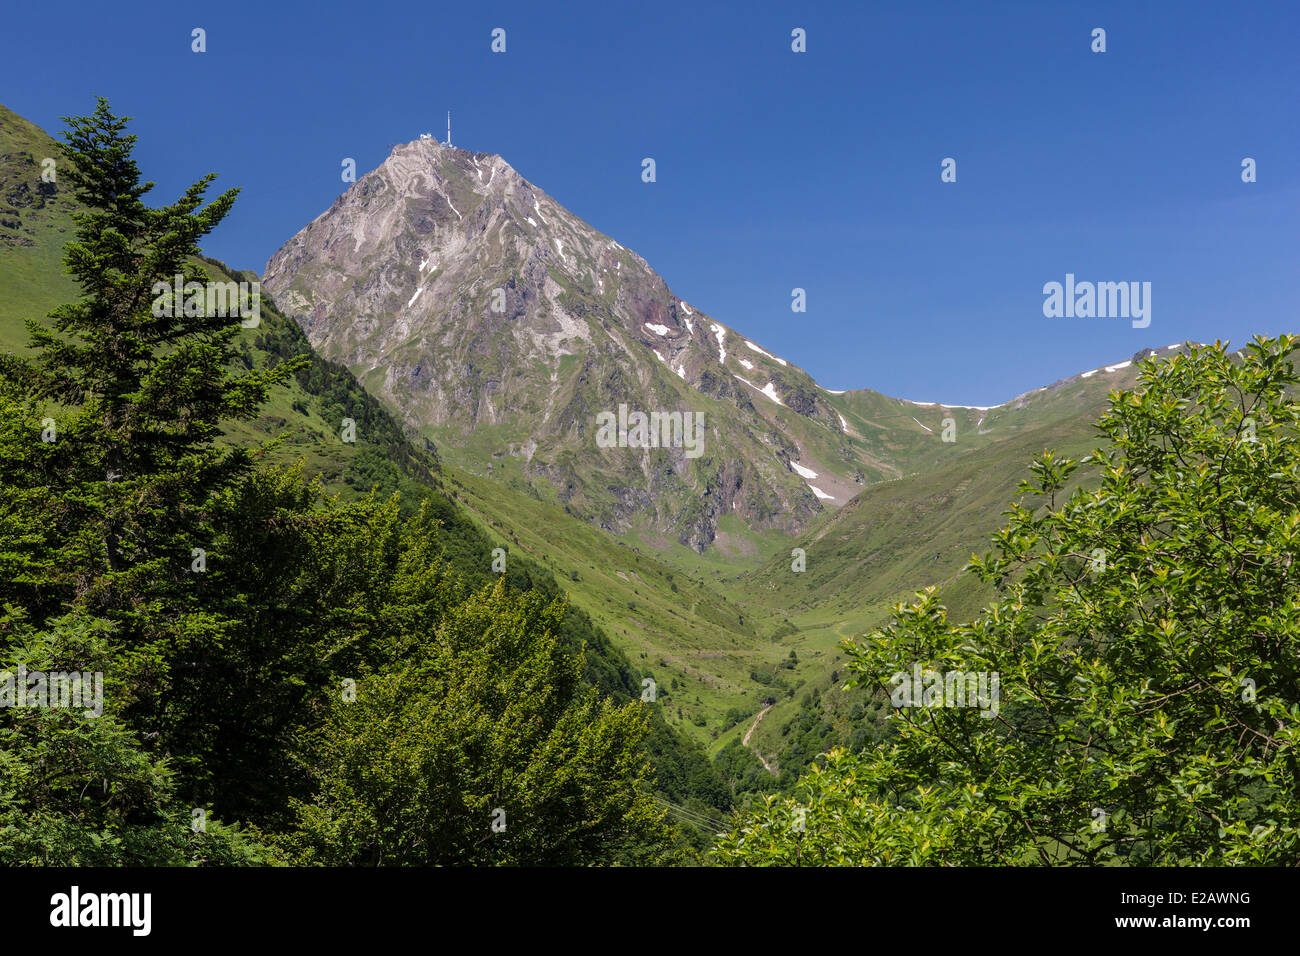 France, Hautes Pyrenees, Bagneres de Bigorre, Pic du Midi (2877m) Stock Photo